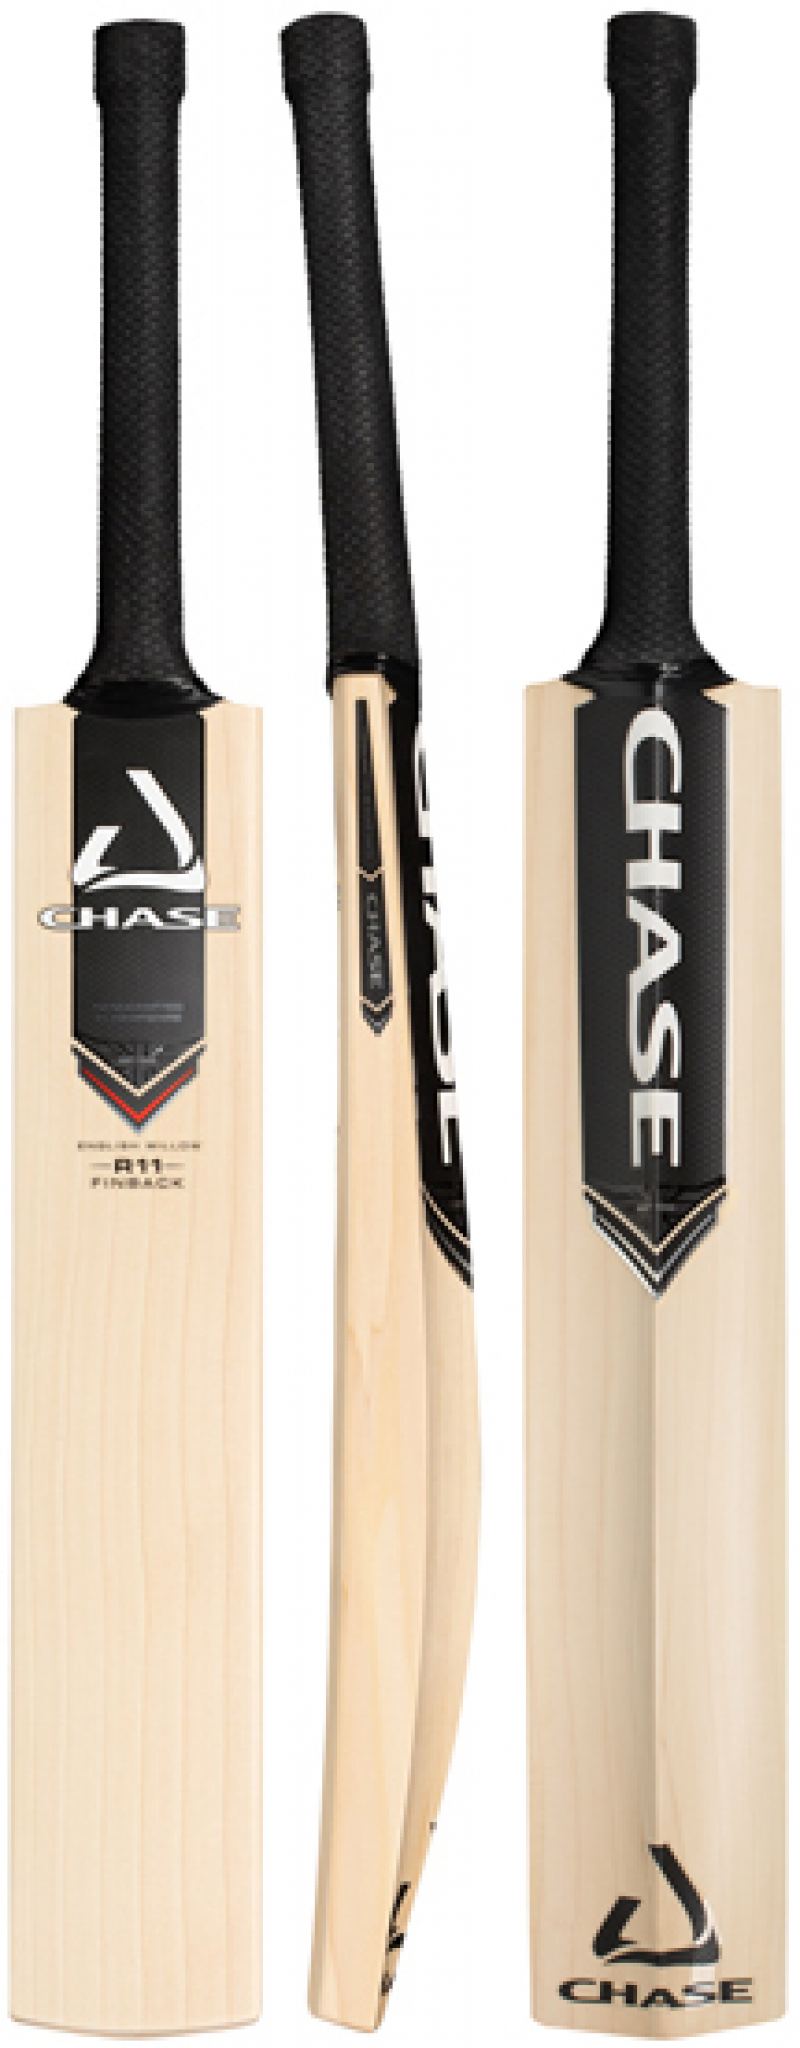 Chase Finback R11 Cricket Bat